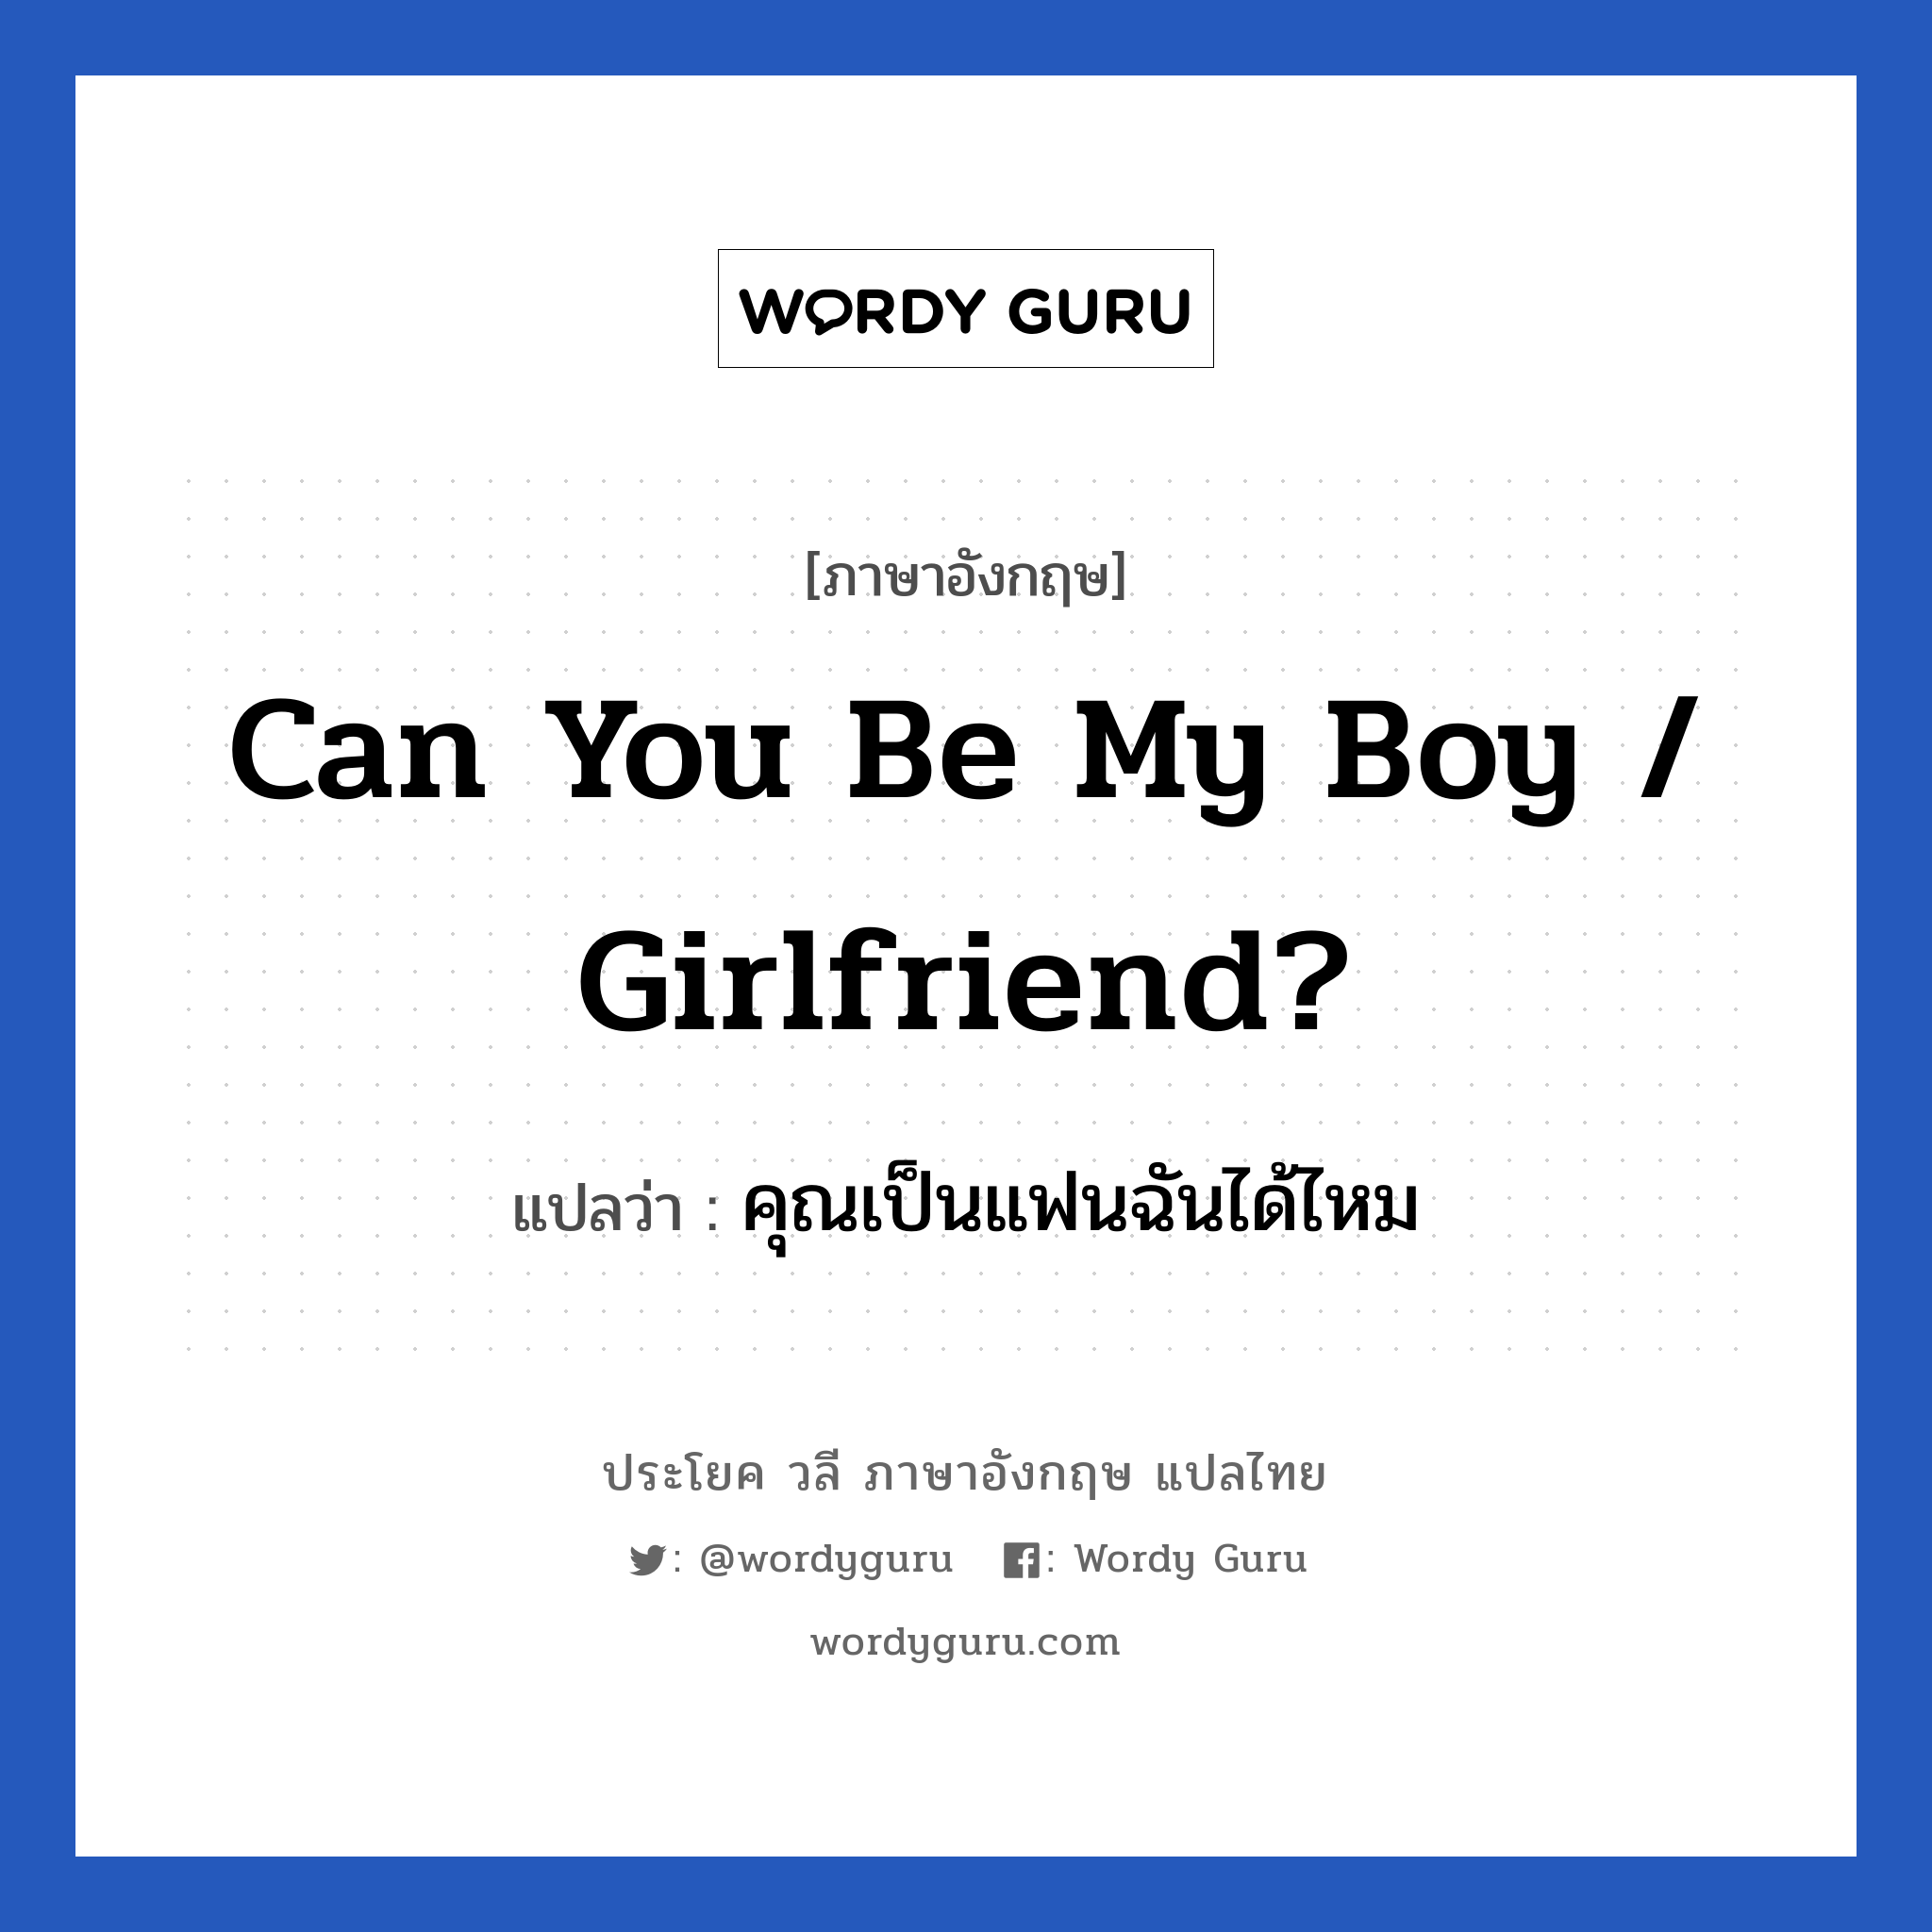 Can you be my boy / girlfriend? แปลว่า? เป็นประโยคในกลุ่มประเภท ความรัก, วลีภาษาอังกฤษ Can you be my boy / girlfriend? แปลว่า คุณเป็นแฟนฉันได้ไหม หมวด ความรัก